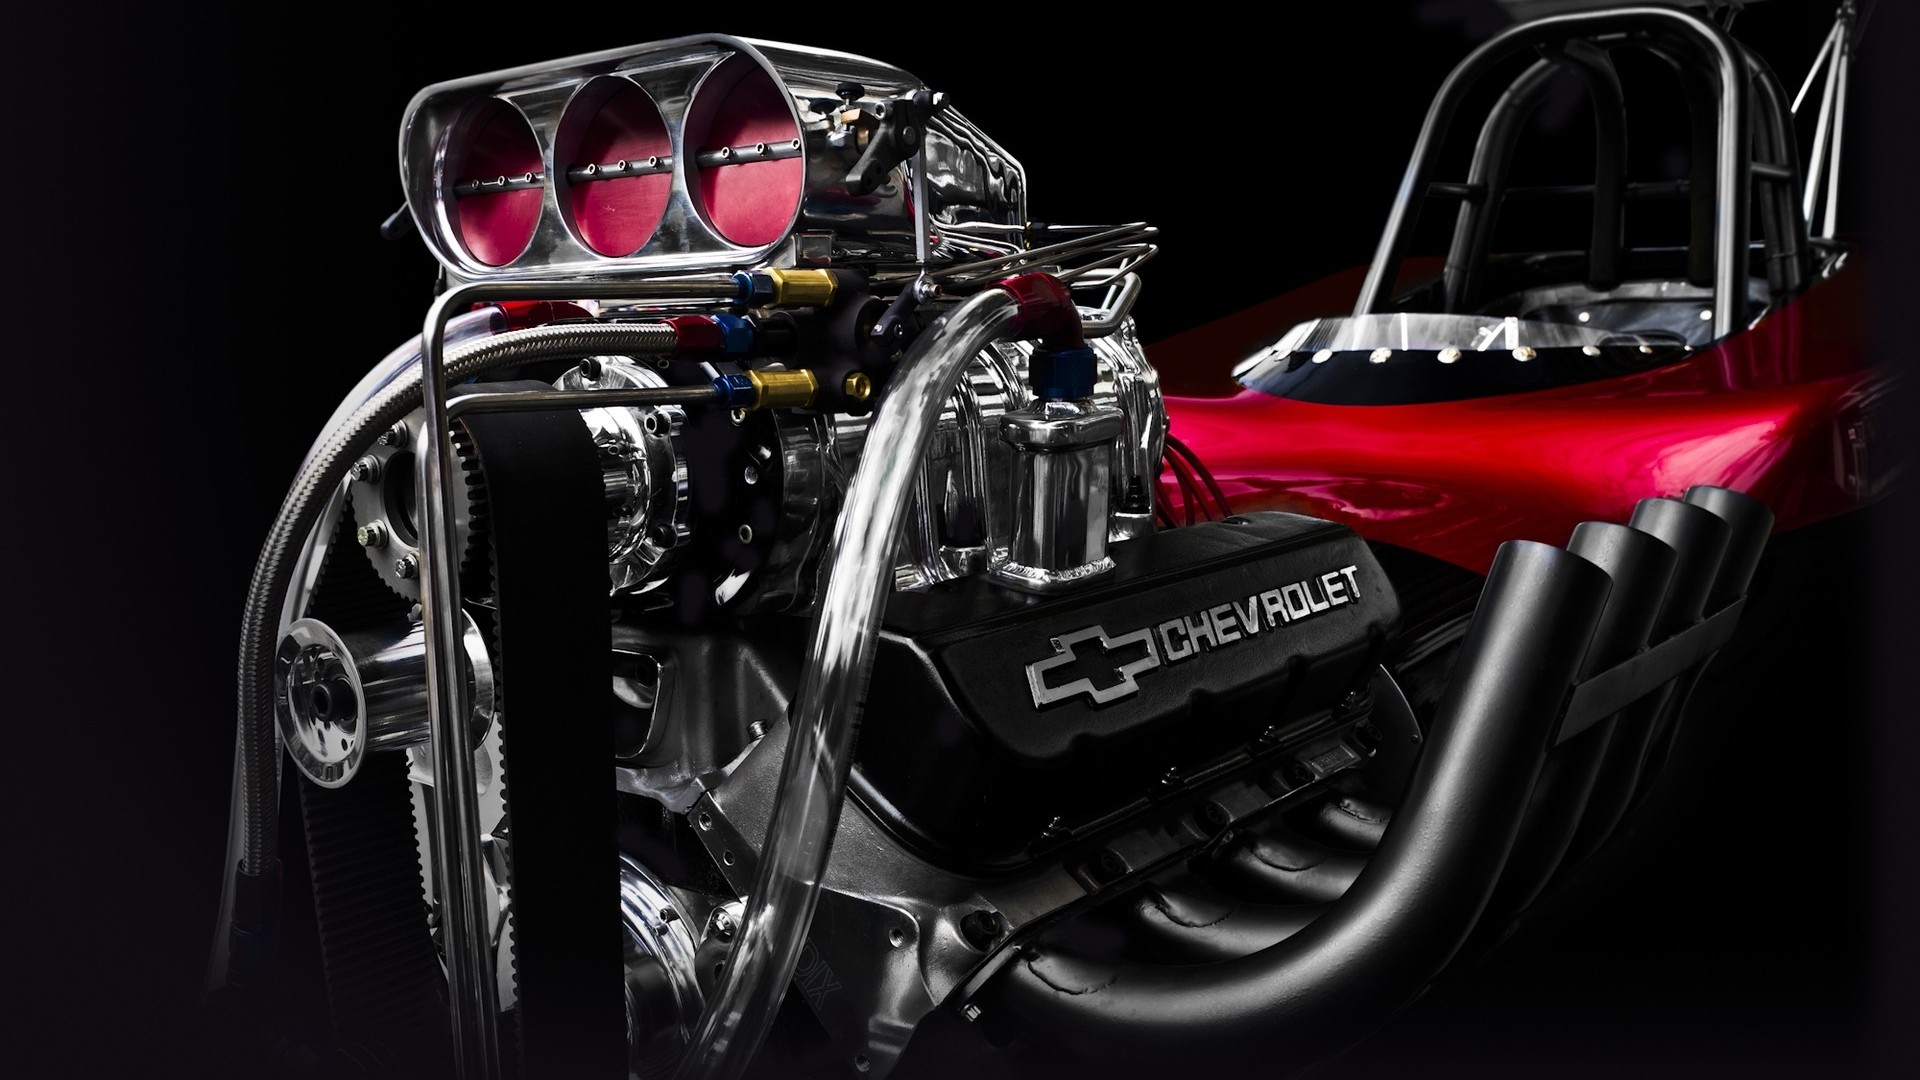 1920x1200-px-Chevrolet-engine-exhaust-engines-gears-motors-1049900-wallhere.com.jpg